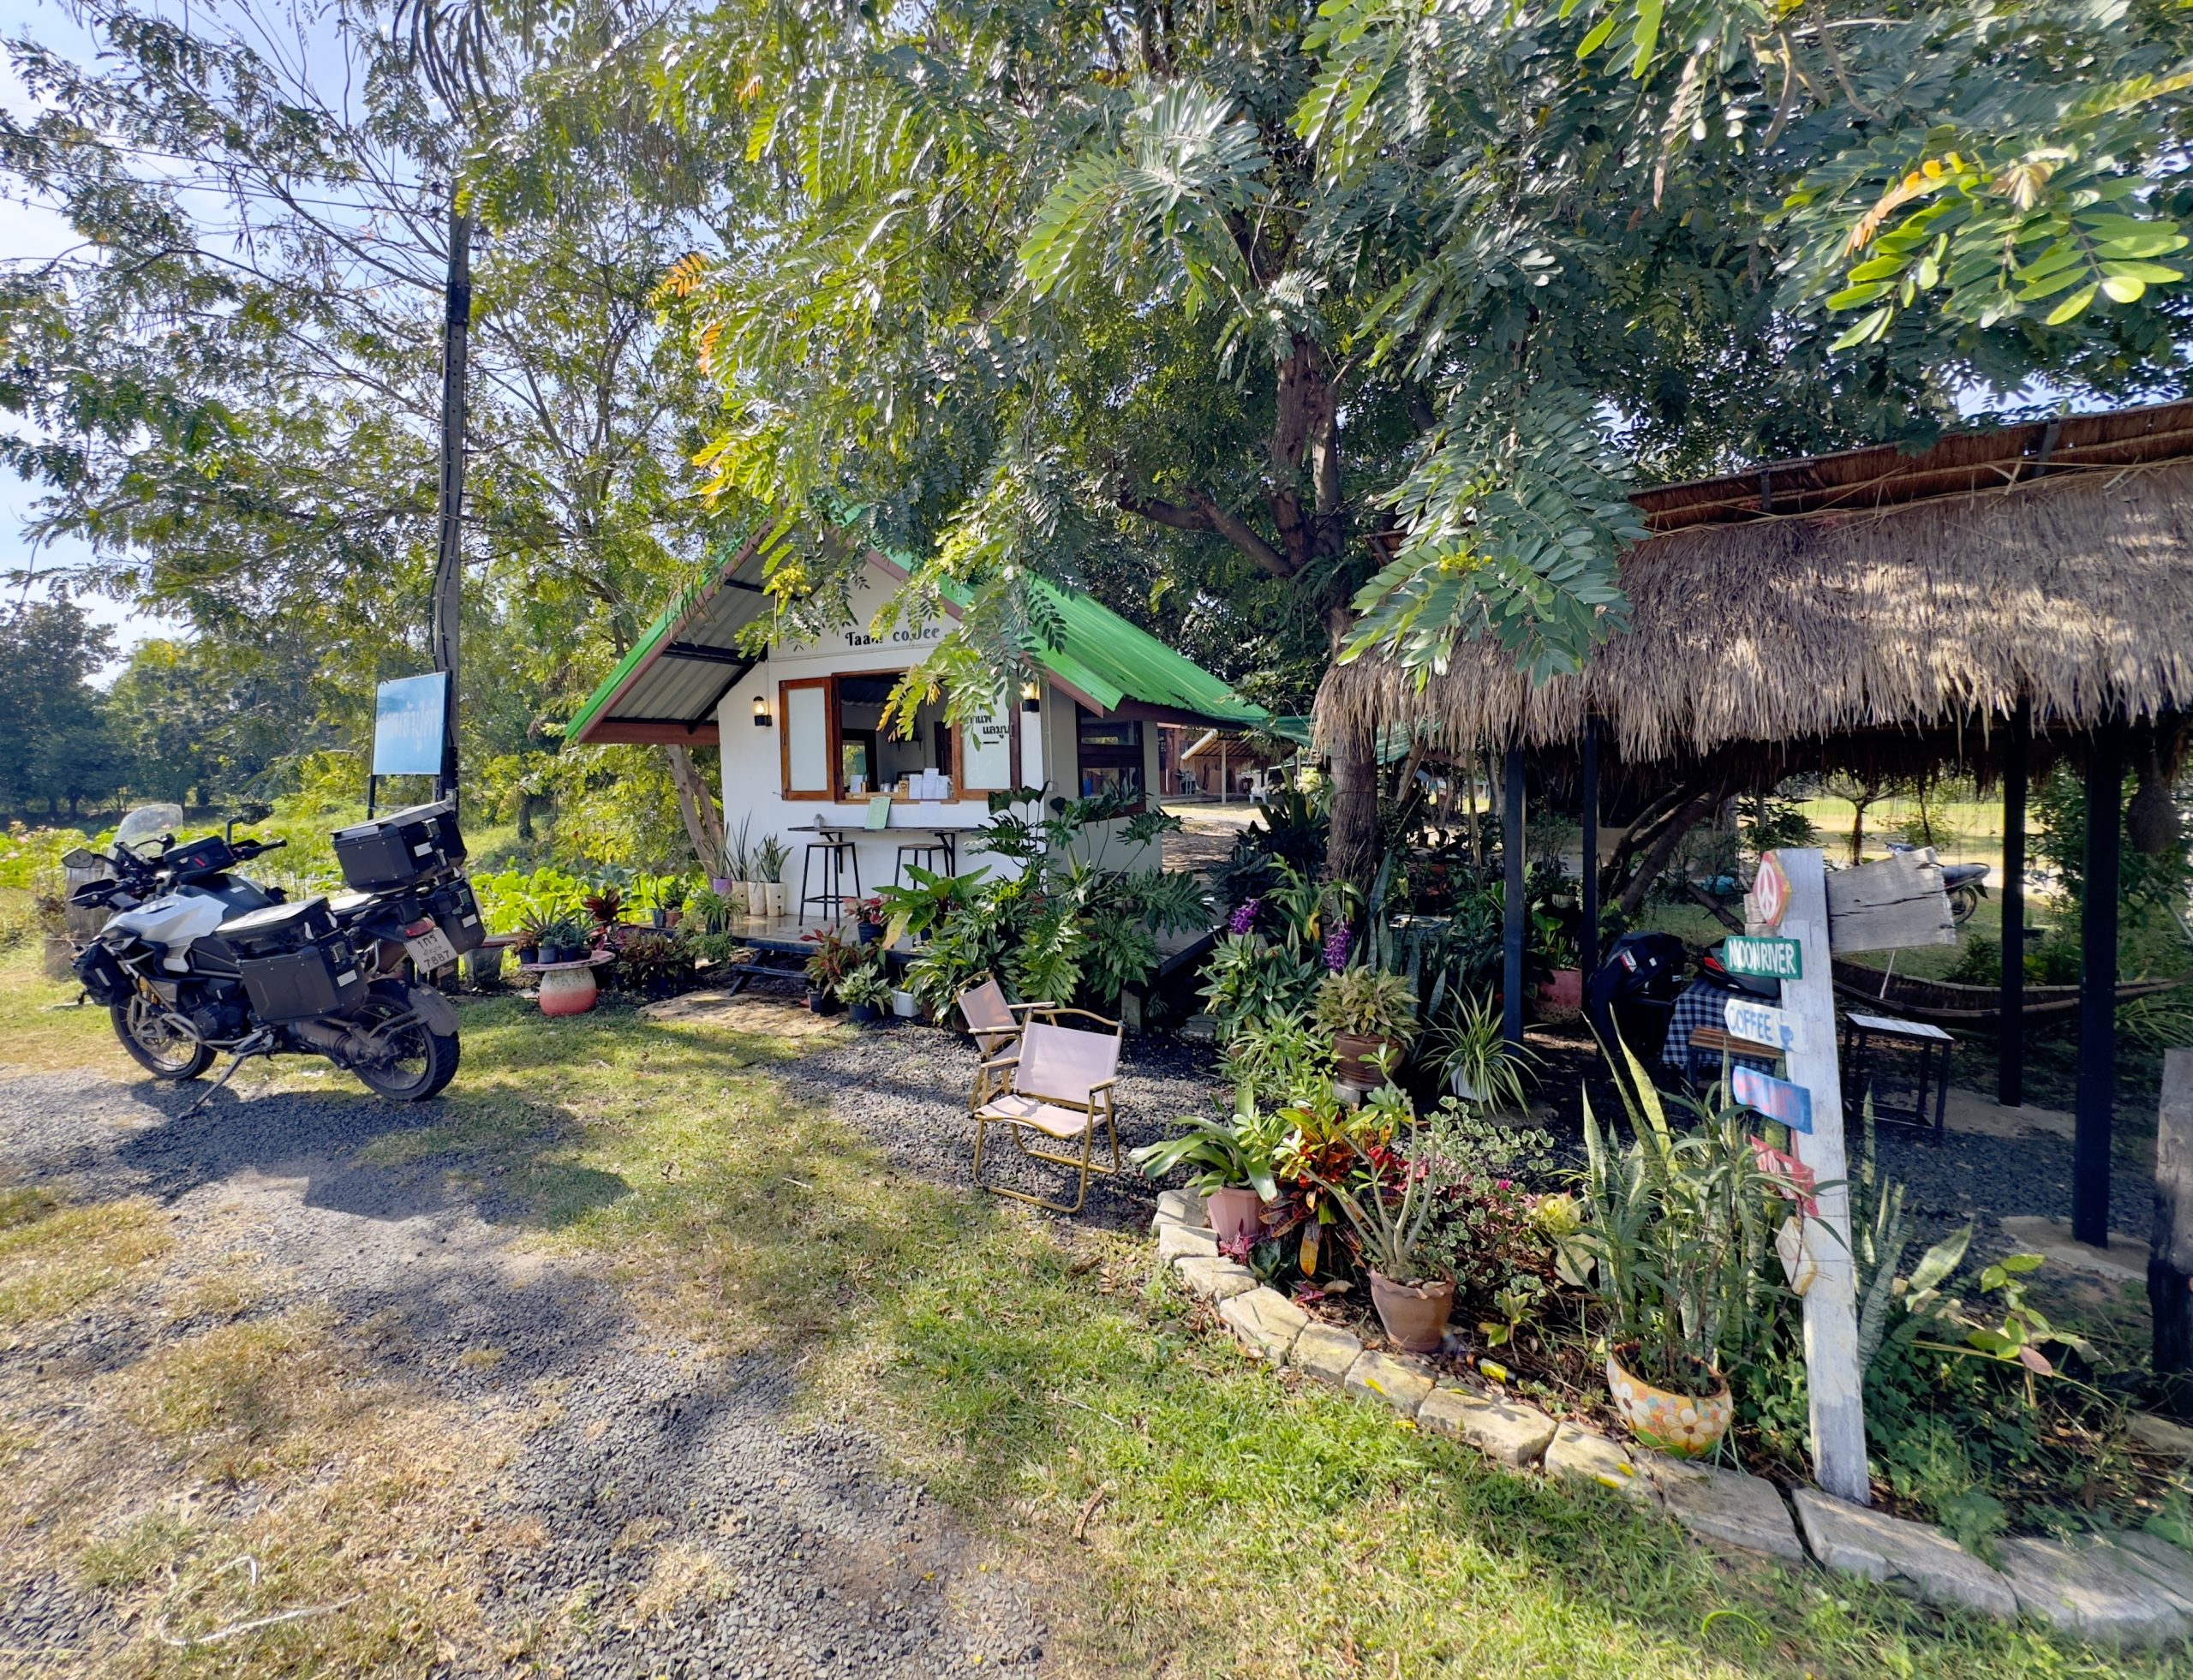 Coffee shop in Thailand